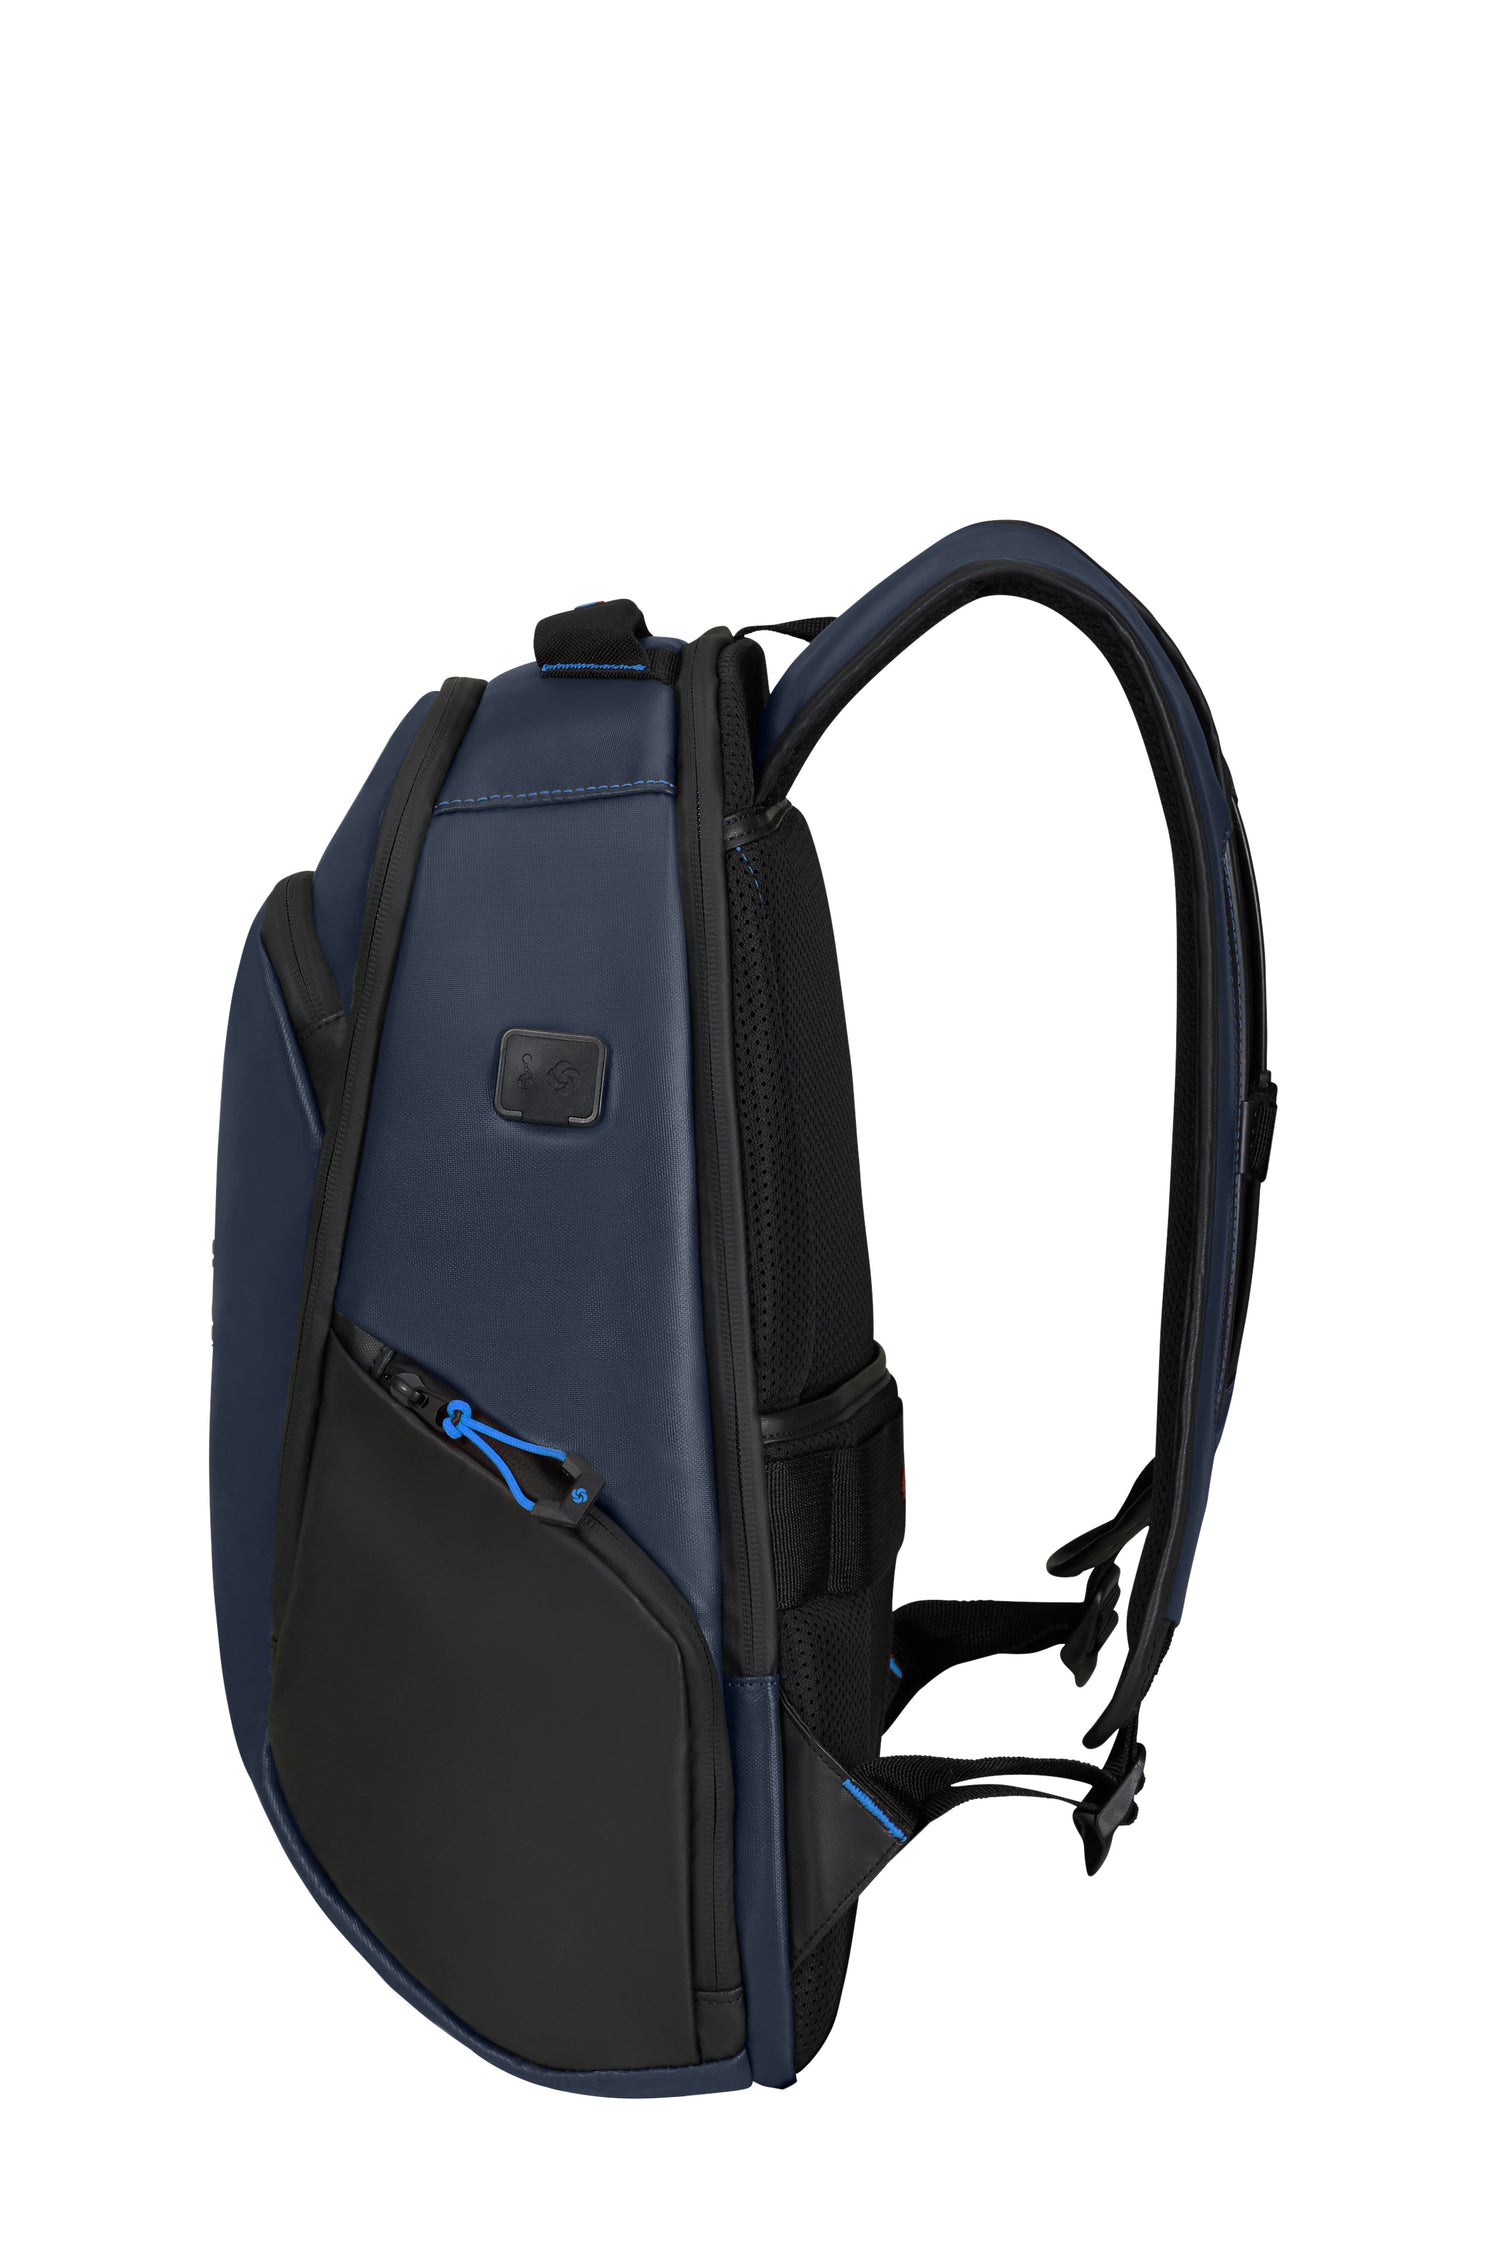 Samsonite Ecodiver Urban Laptop Backpack Medium USB